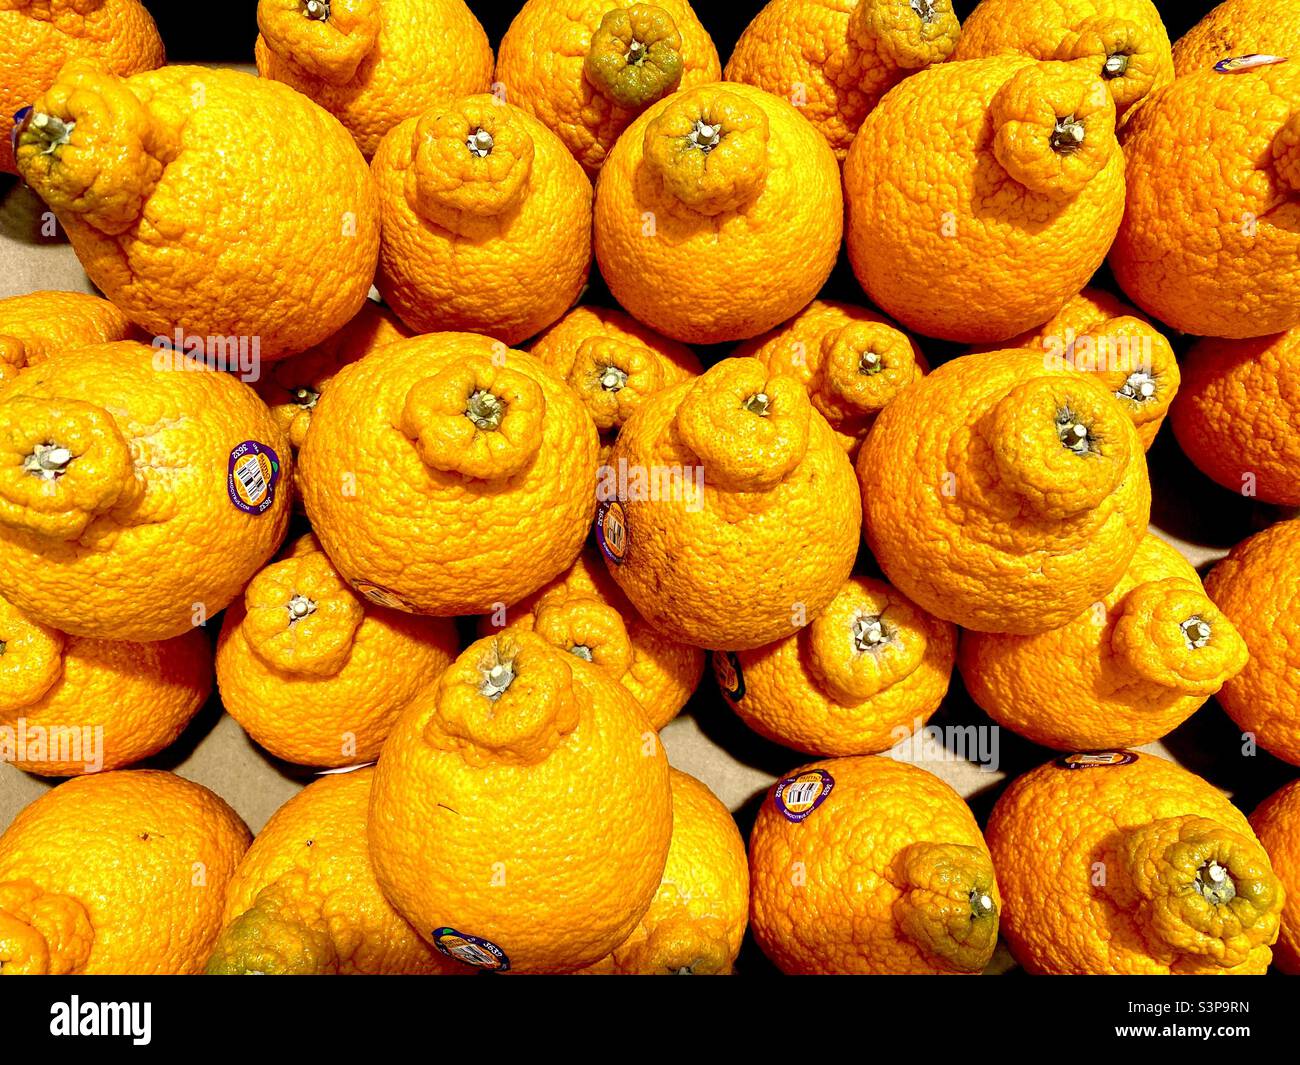 https://c8.alamy.com/comp/S3P9RN/sumo-citrus-fruit-display-in-a-supermarket-S3P9RN.jpg